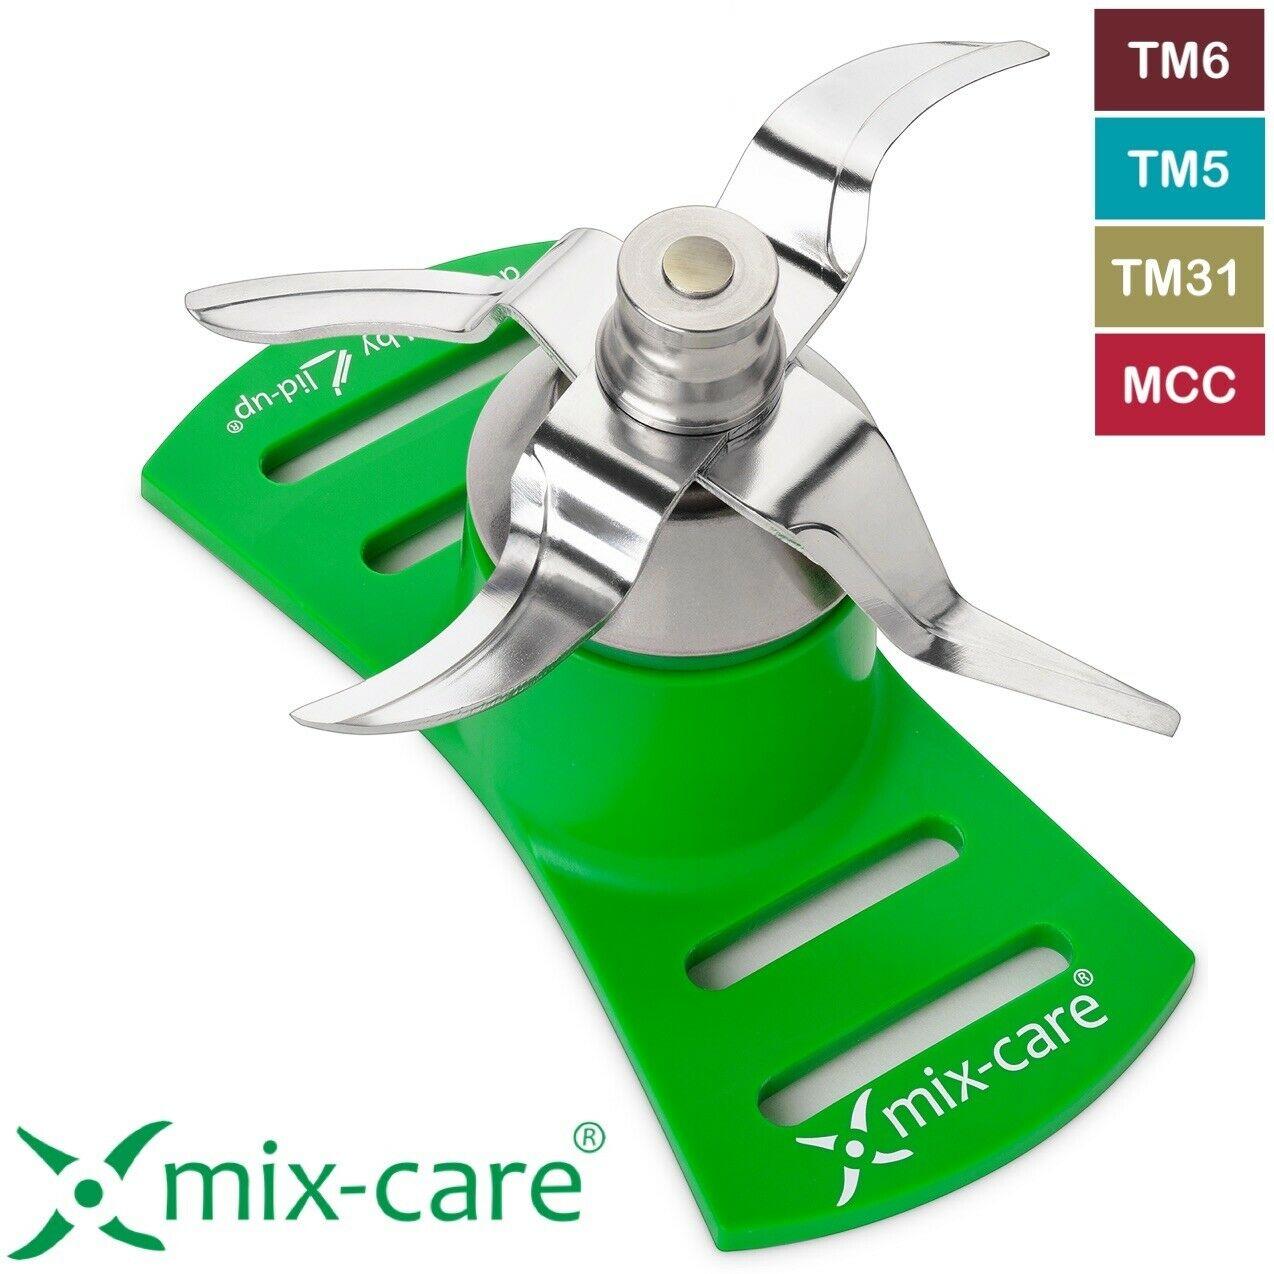 mix-care Geschirrspülmaschineneinsatz kompatibel mit dem Mixmesser des Thermomix - Mixcover - Lid-up